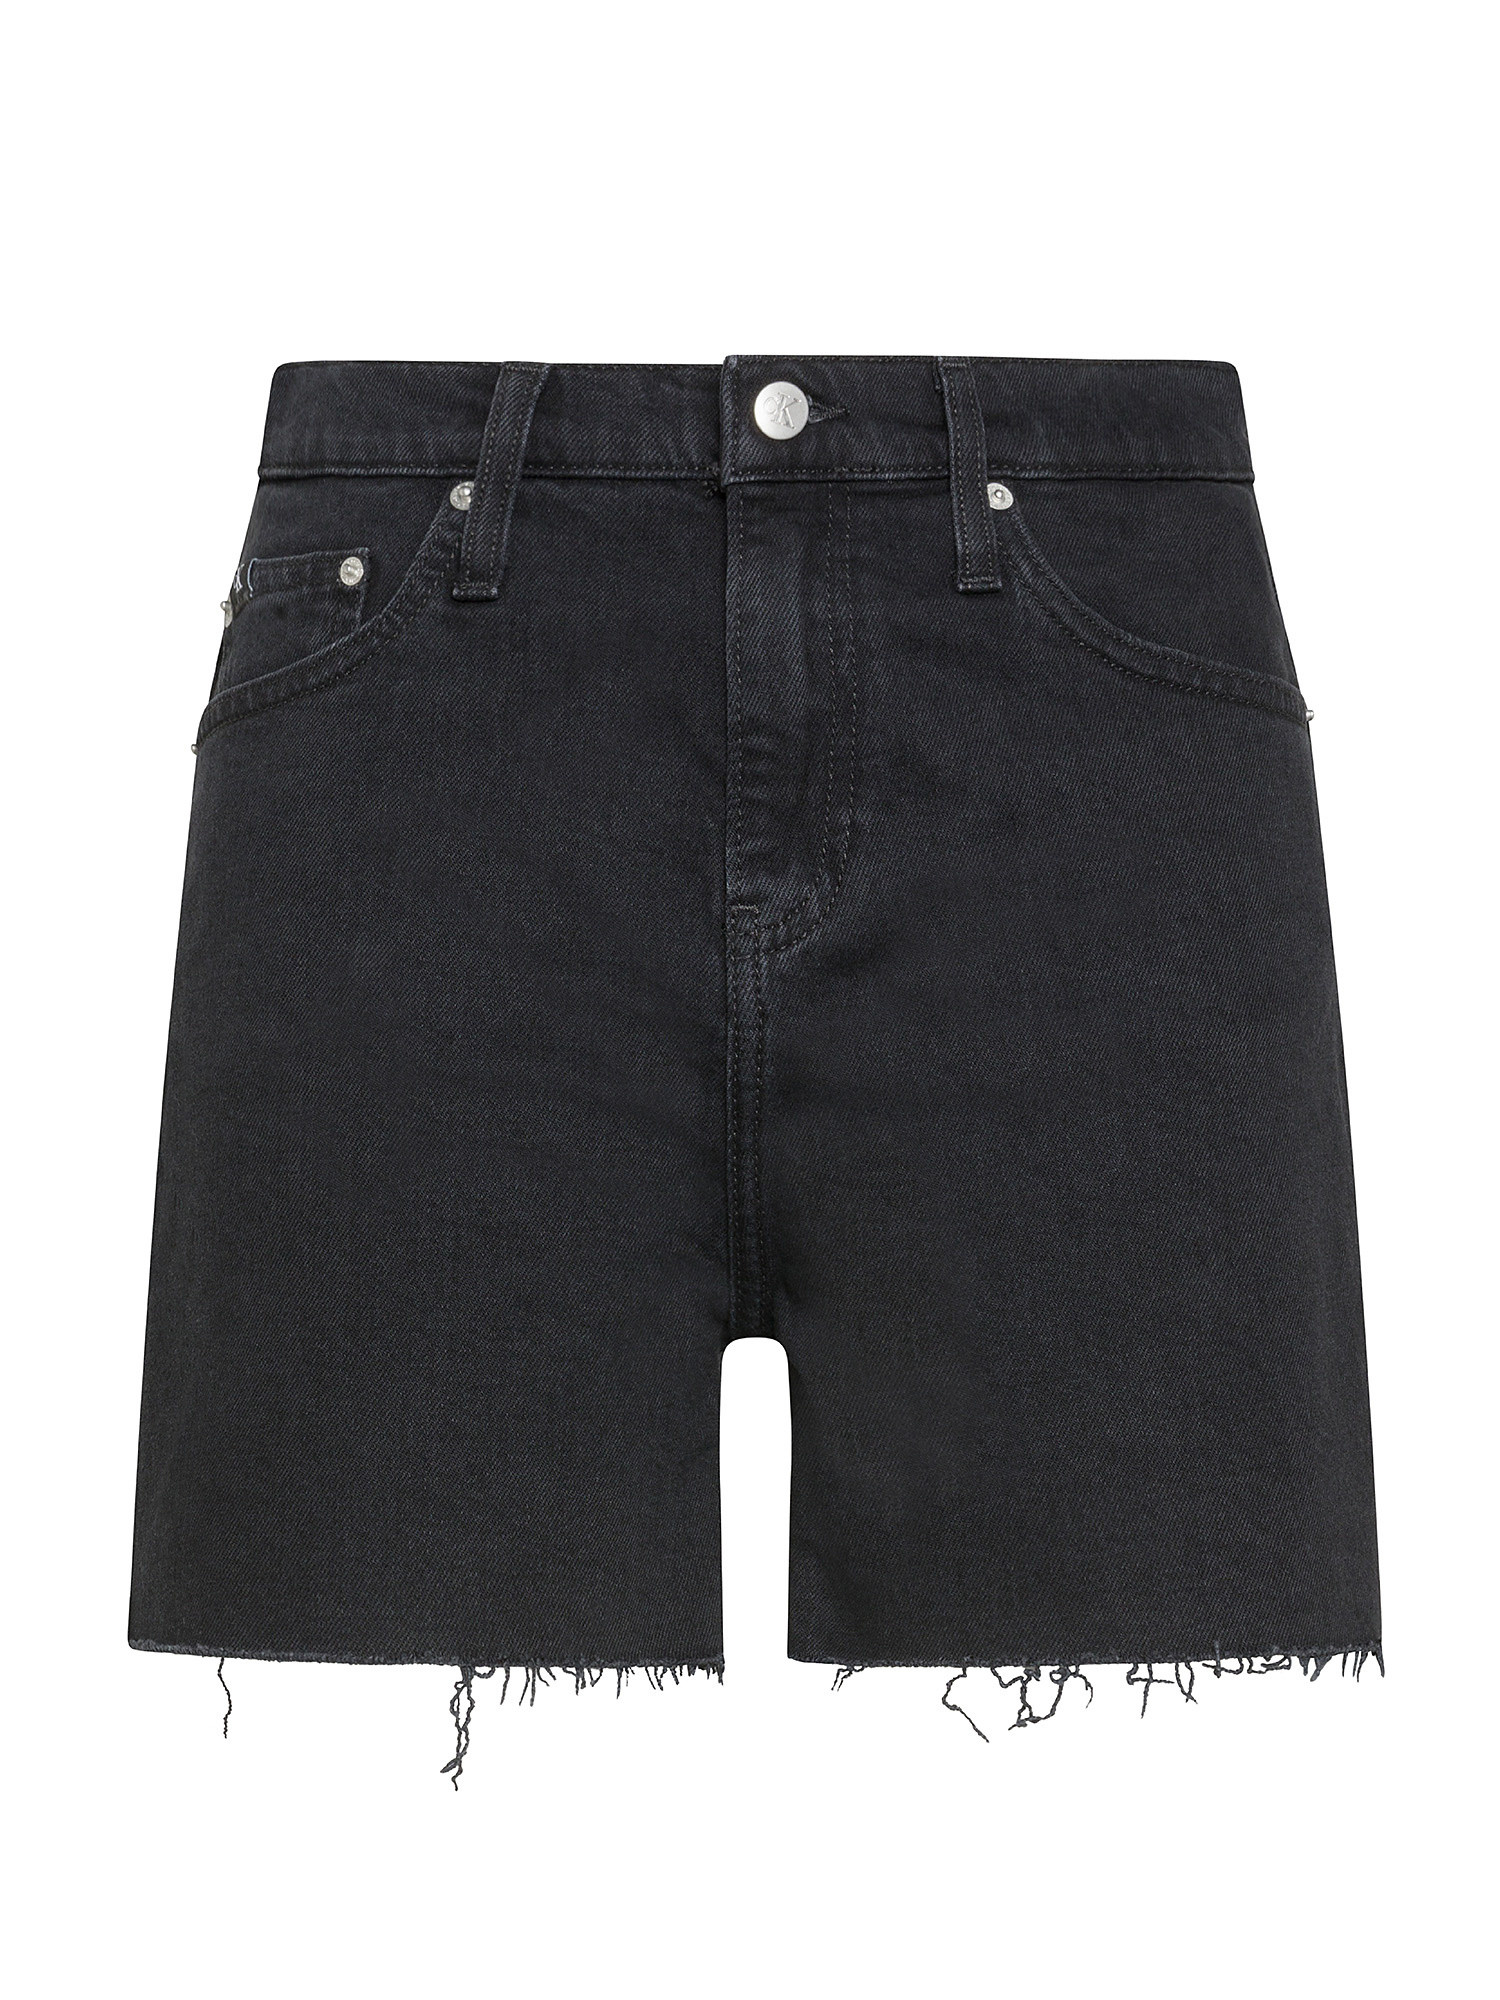 Calvin Klein Jeans - Shorts in denim, Nero, large image number 0